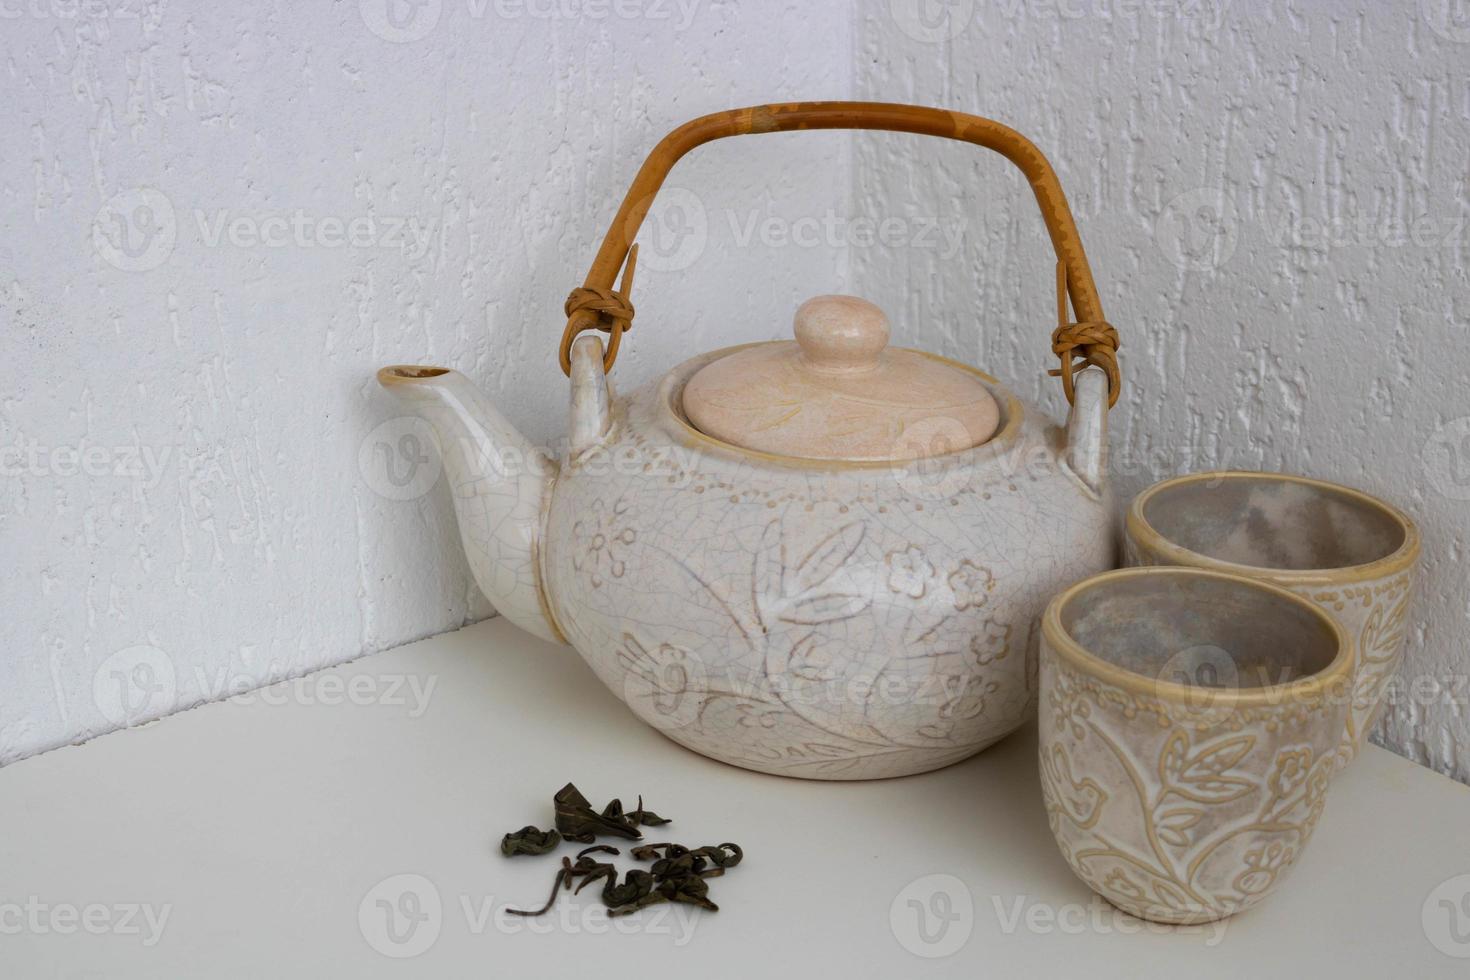 Vintage or retro style ceramic teapot, Japanese style Teapot, Isolated on white background photo